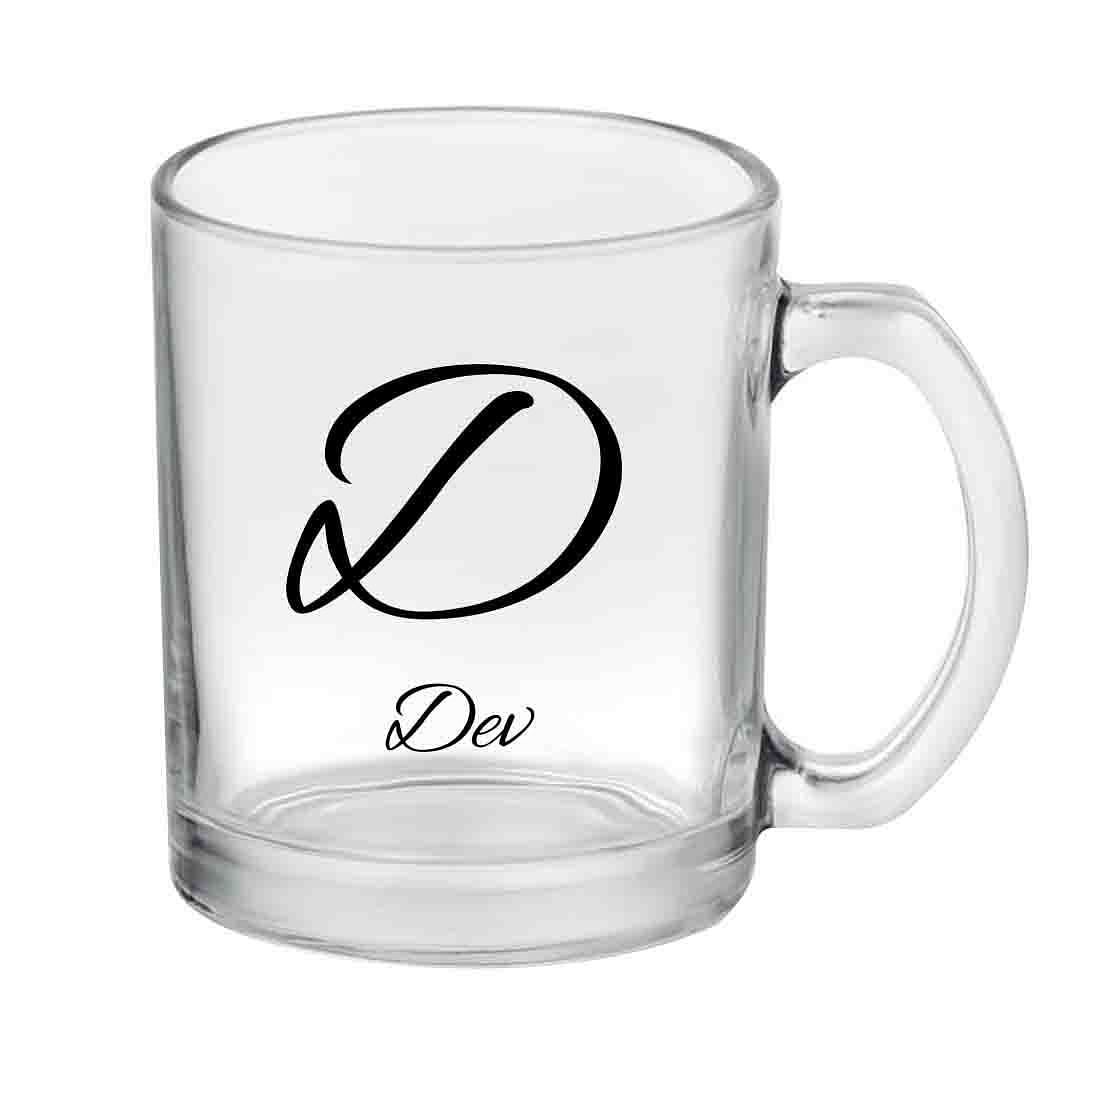 Personalized Coffee Tea Mug for Gift - Initials Nutcase